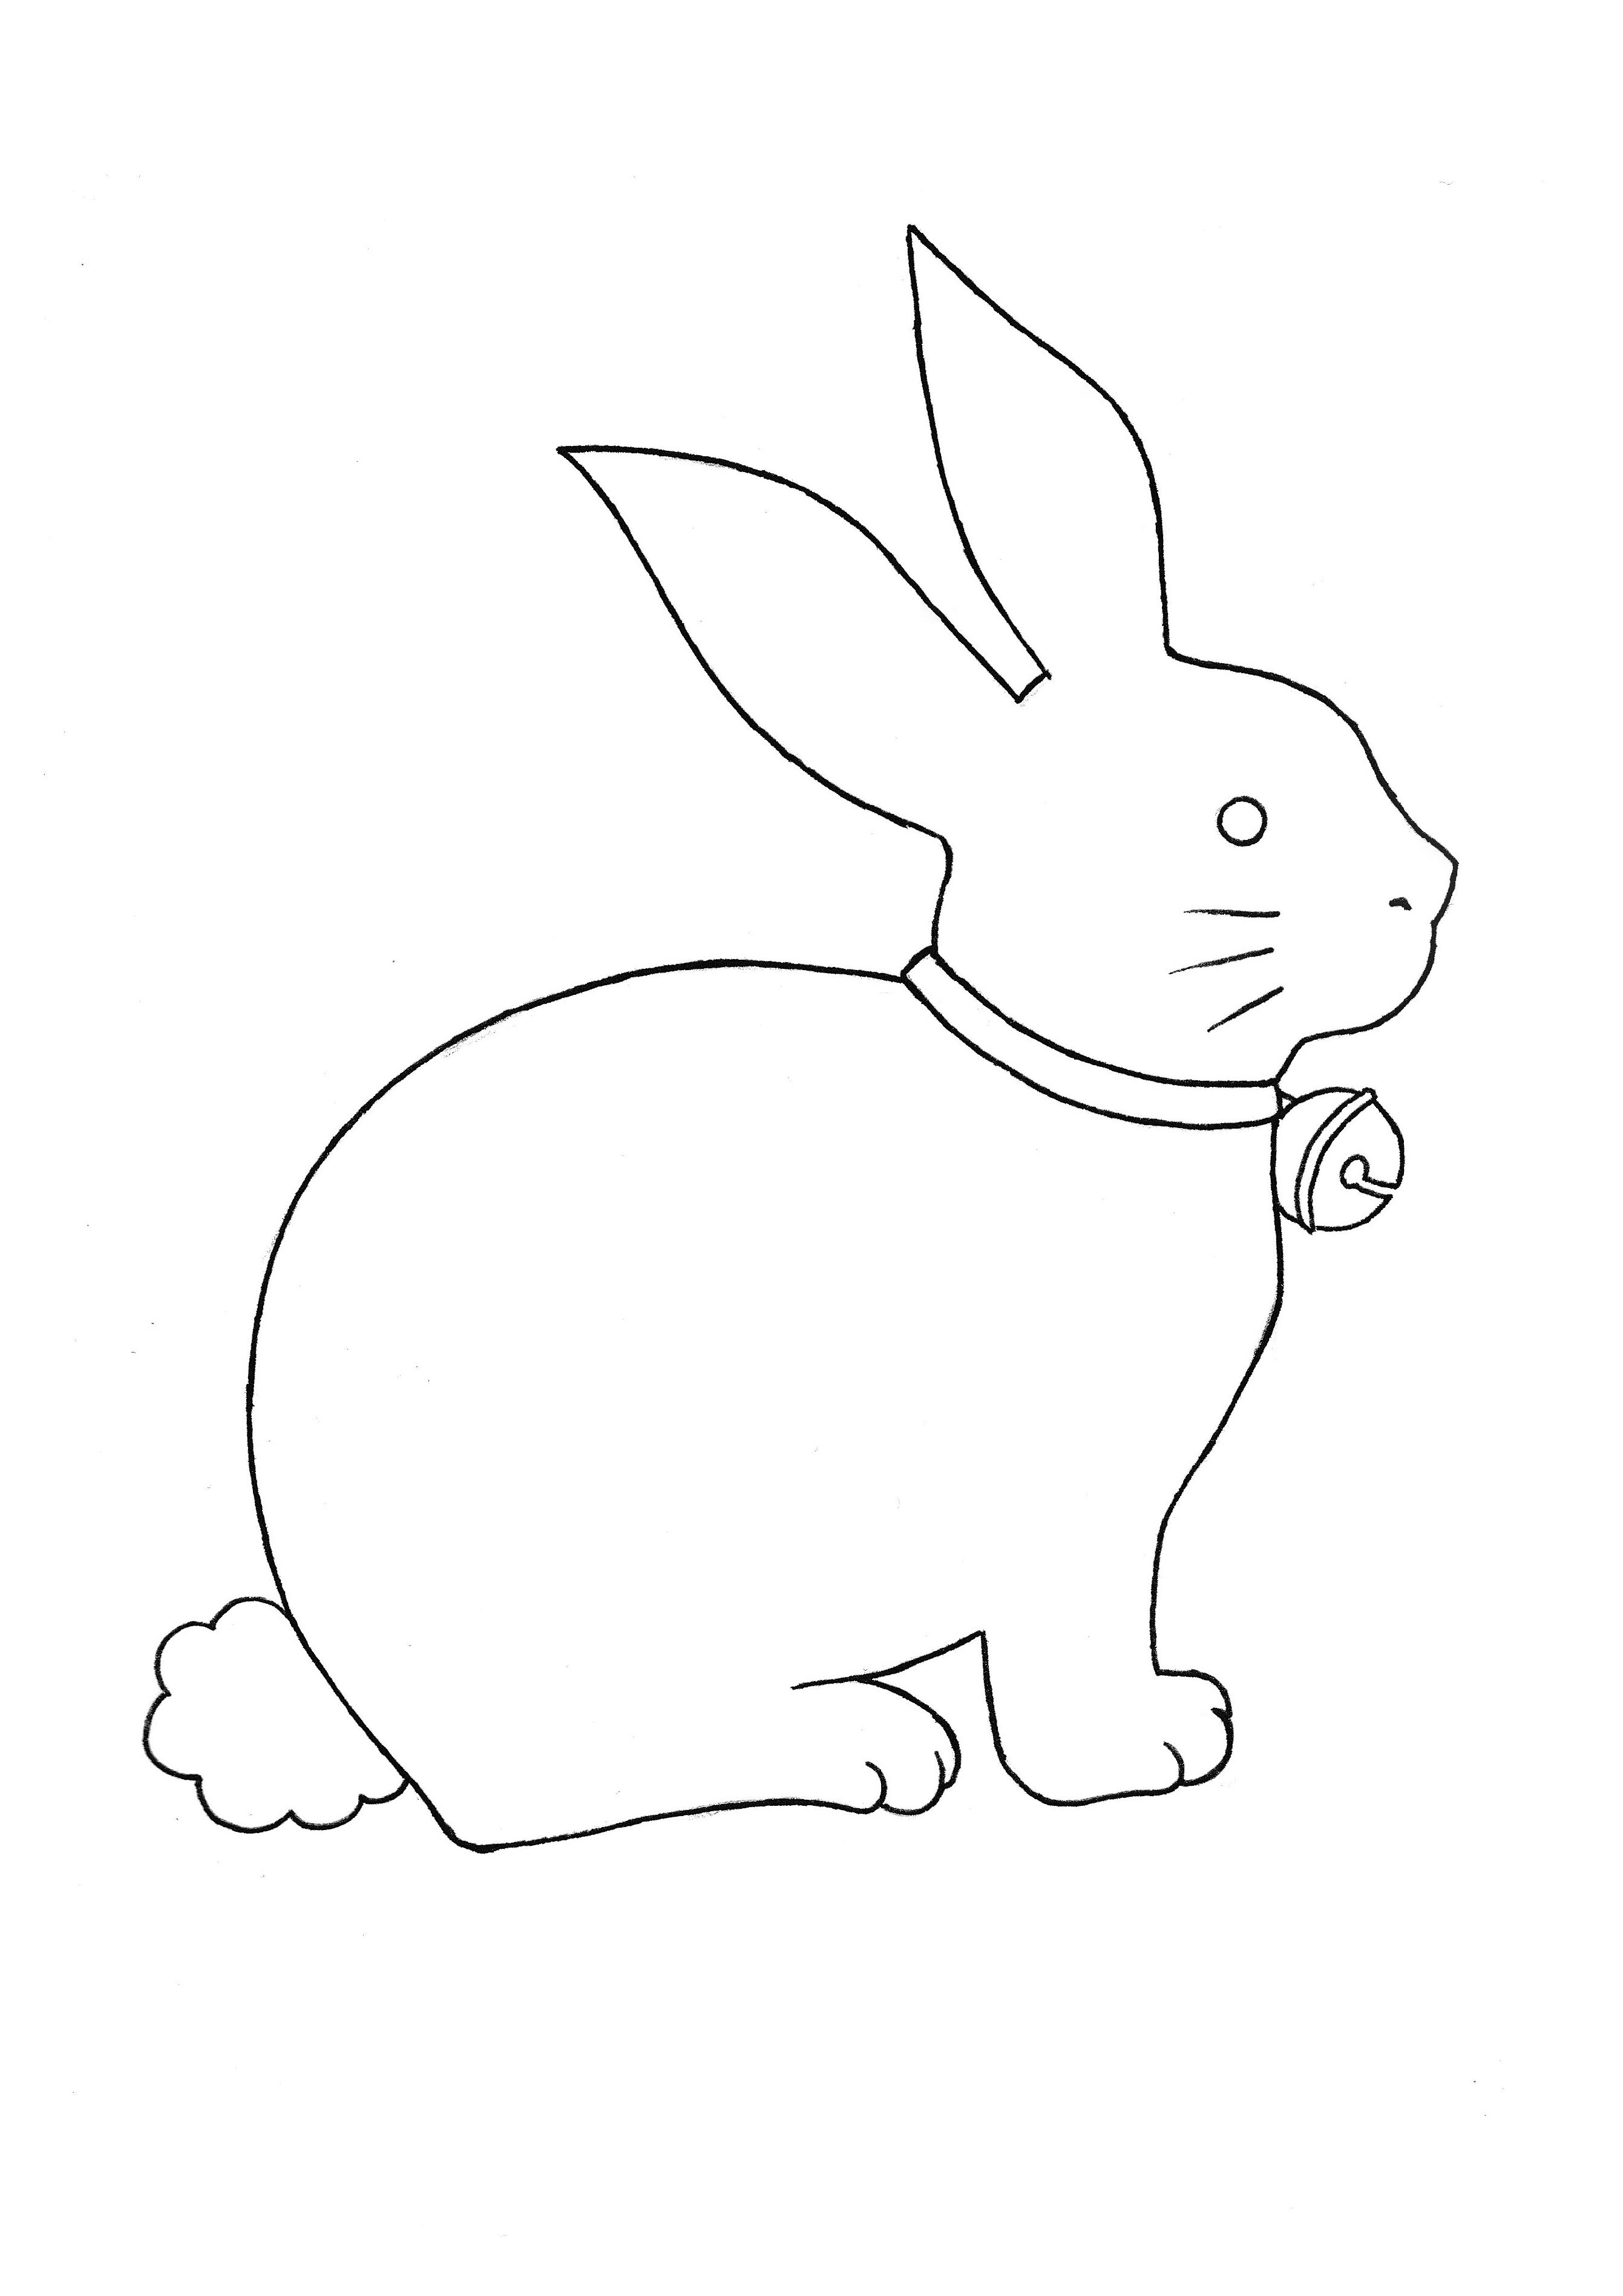 Easter Bunny Printable Template